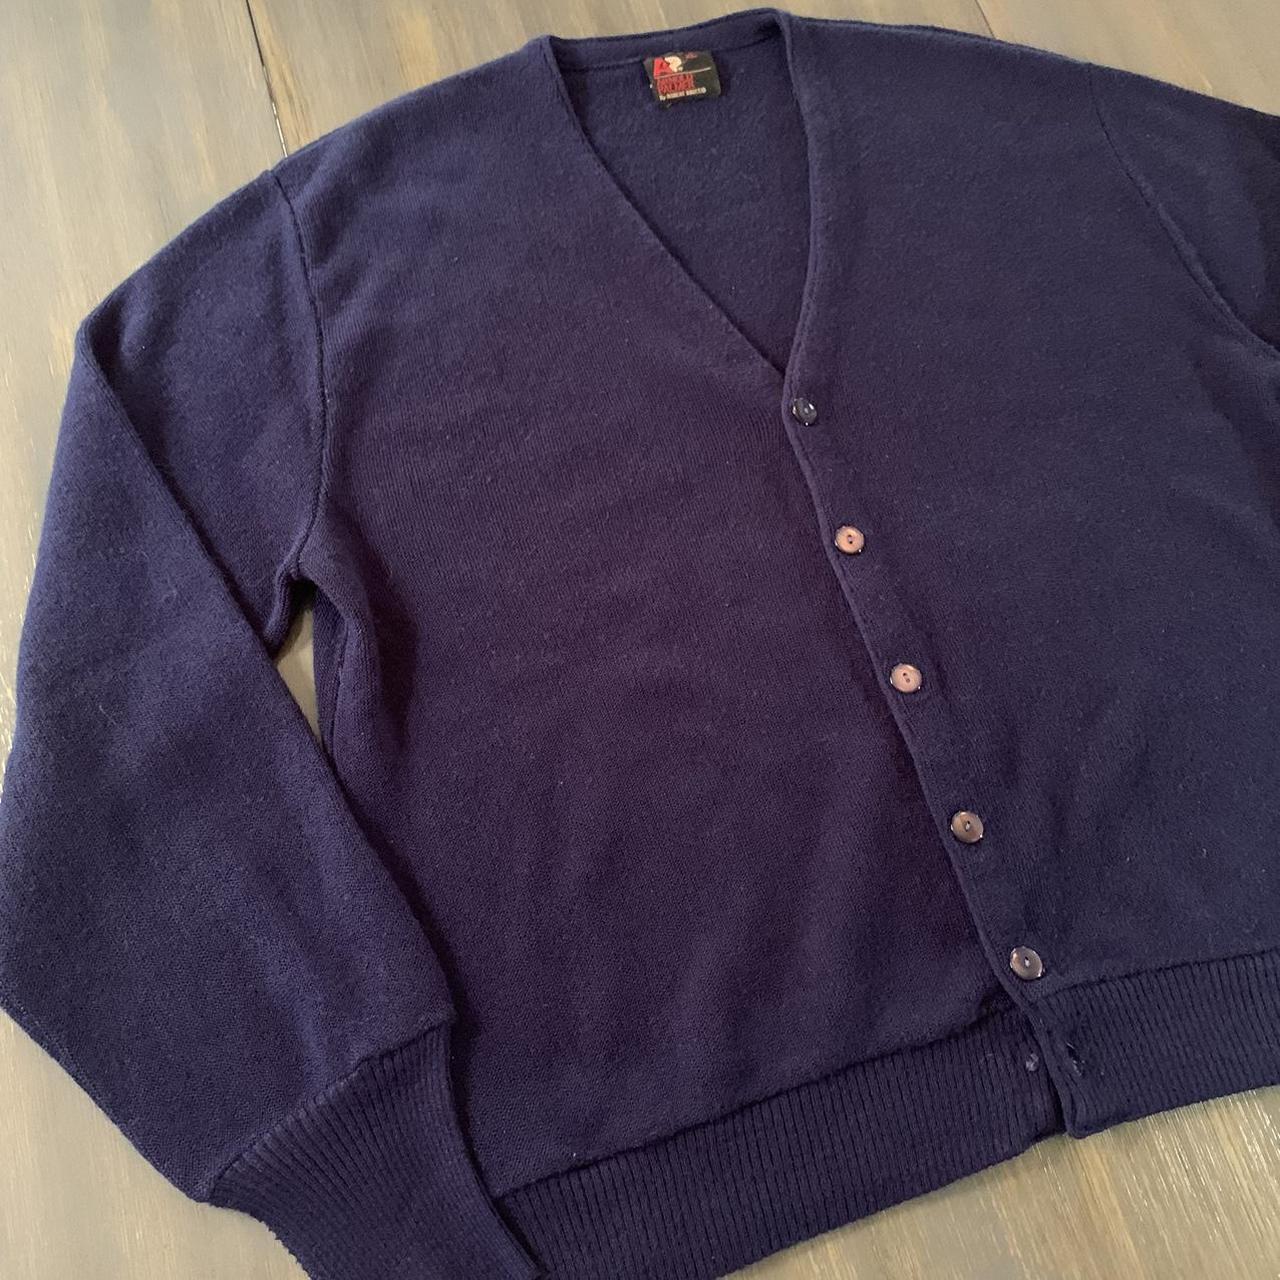 Vintage Arnold Palmer cardigan sweater size XL in... - Depop